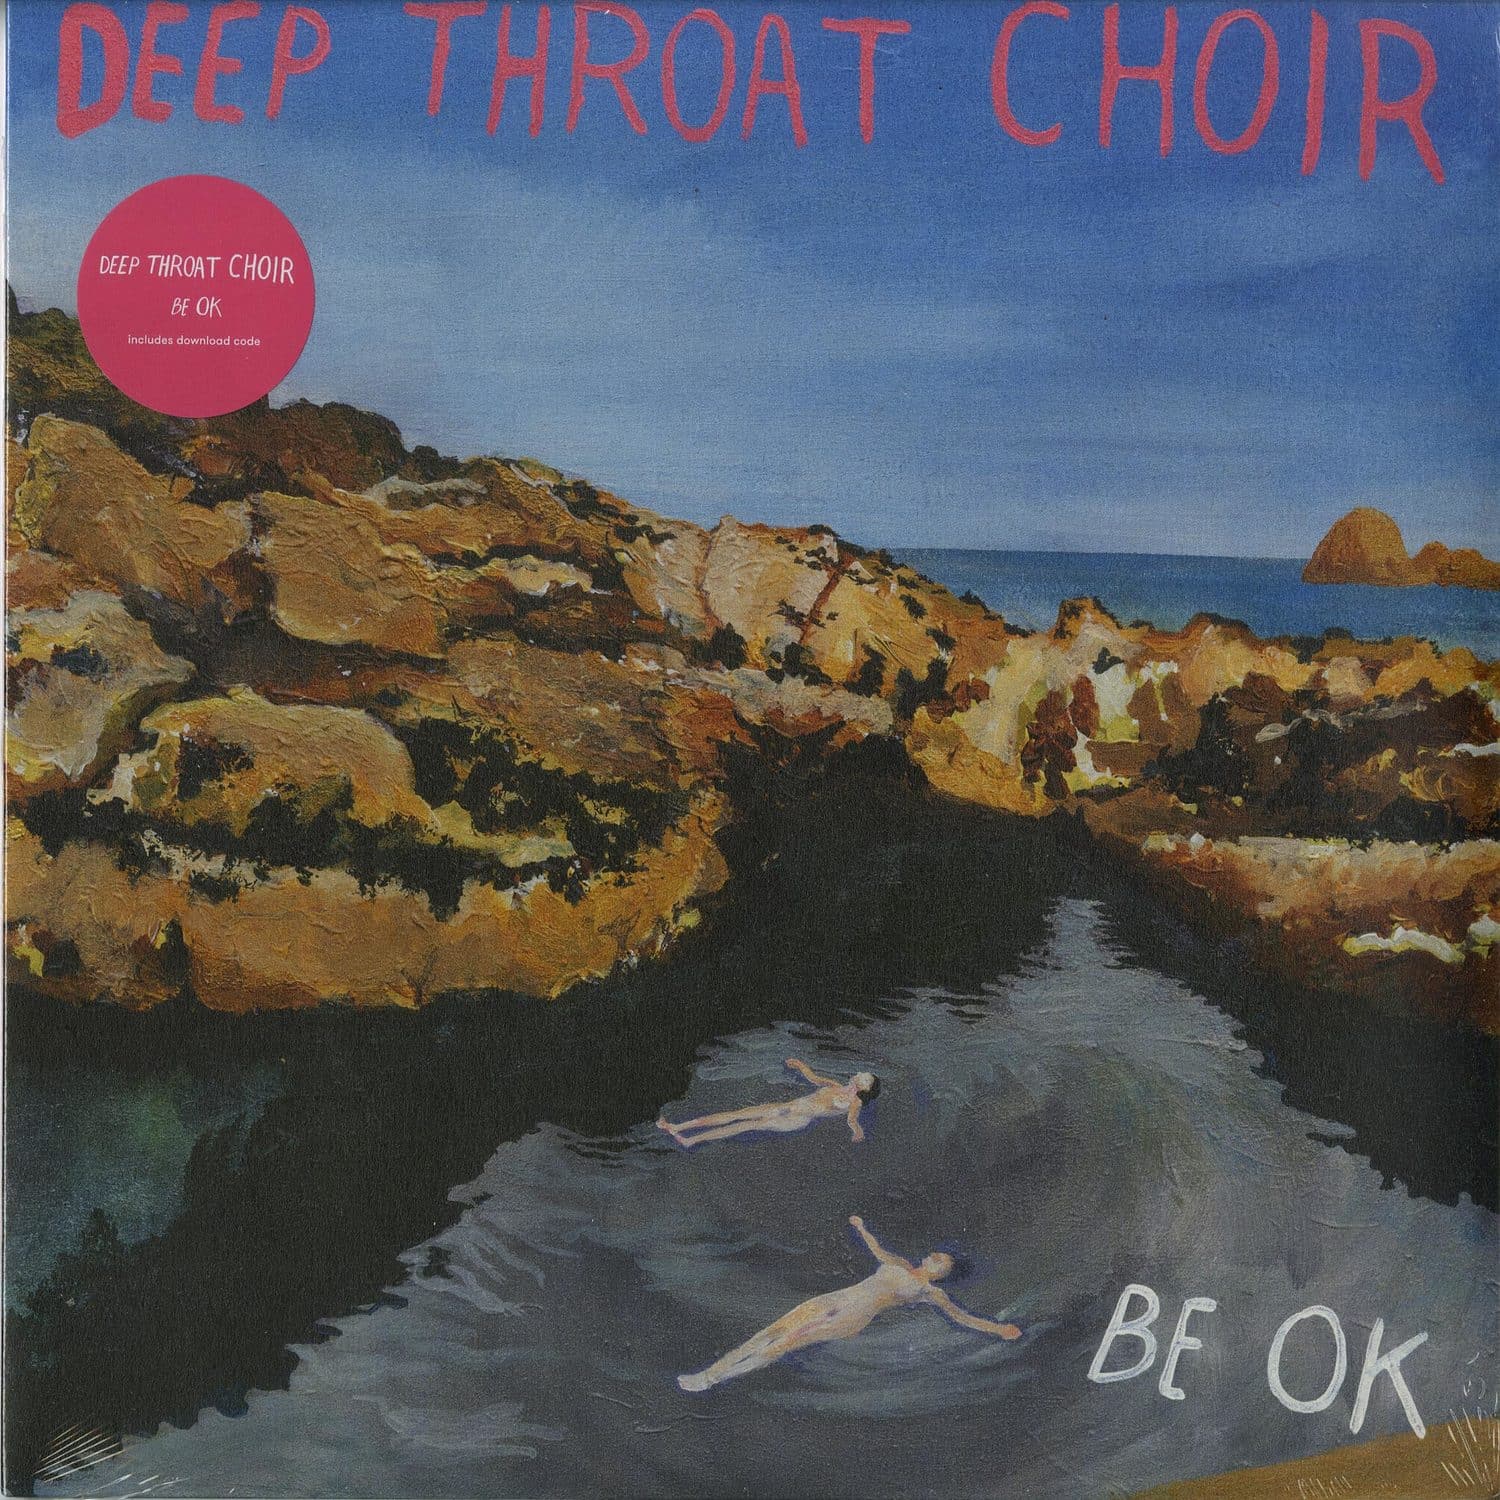 Deep Throat Choir - BE OK 